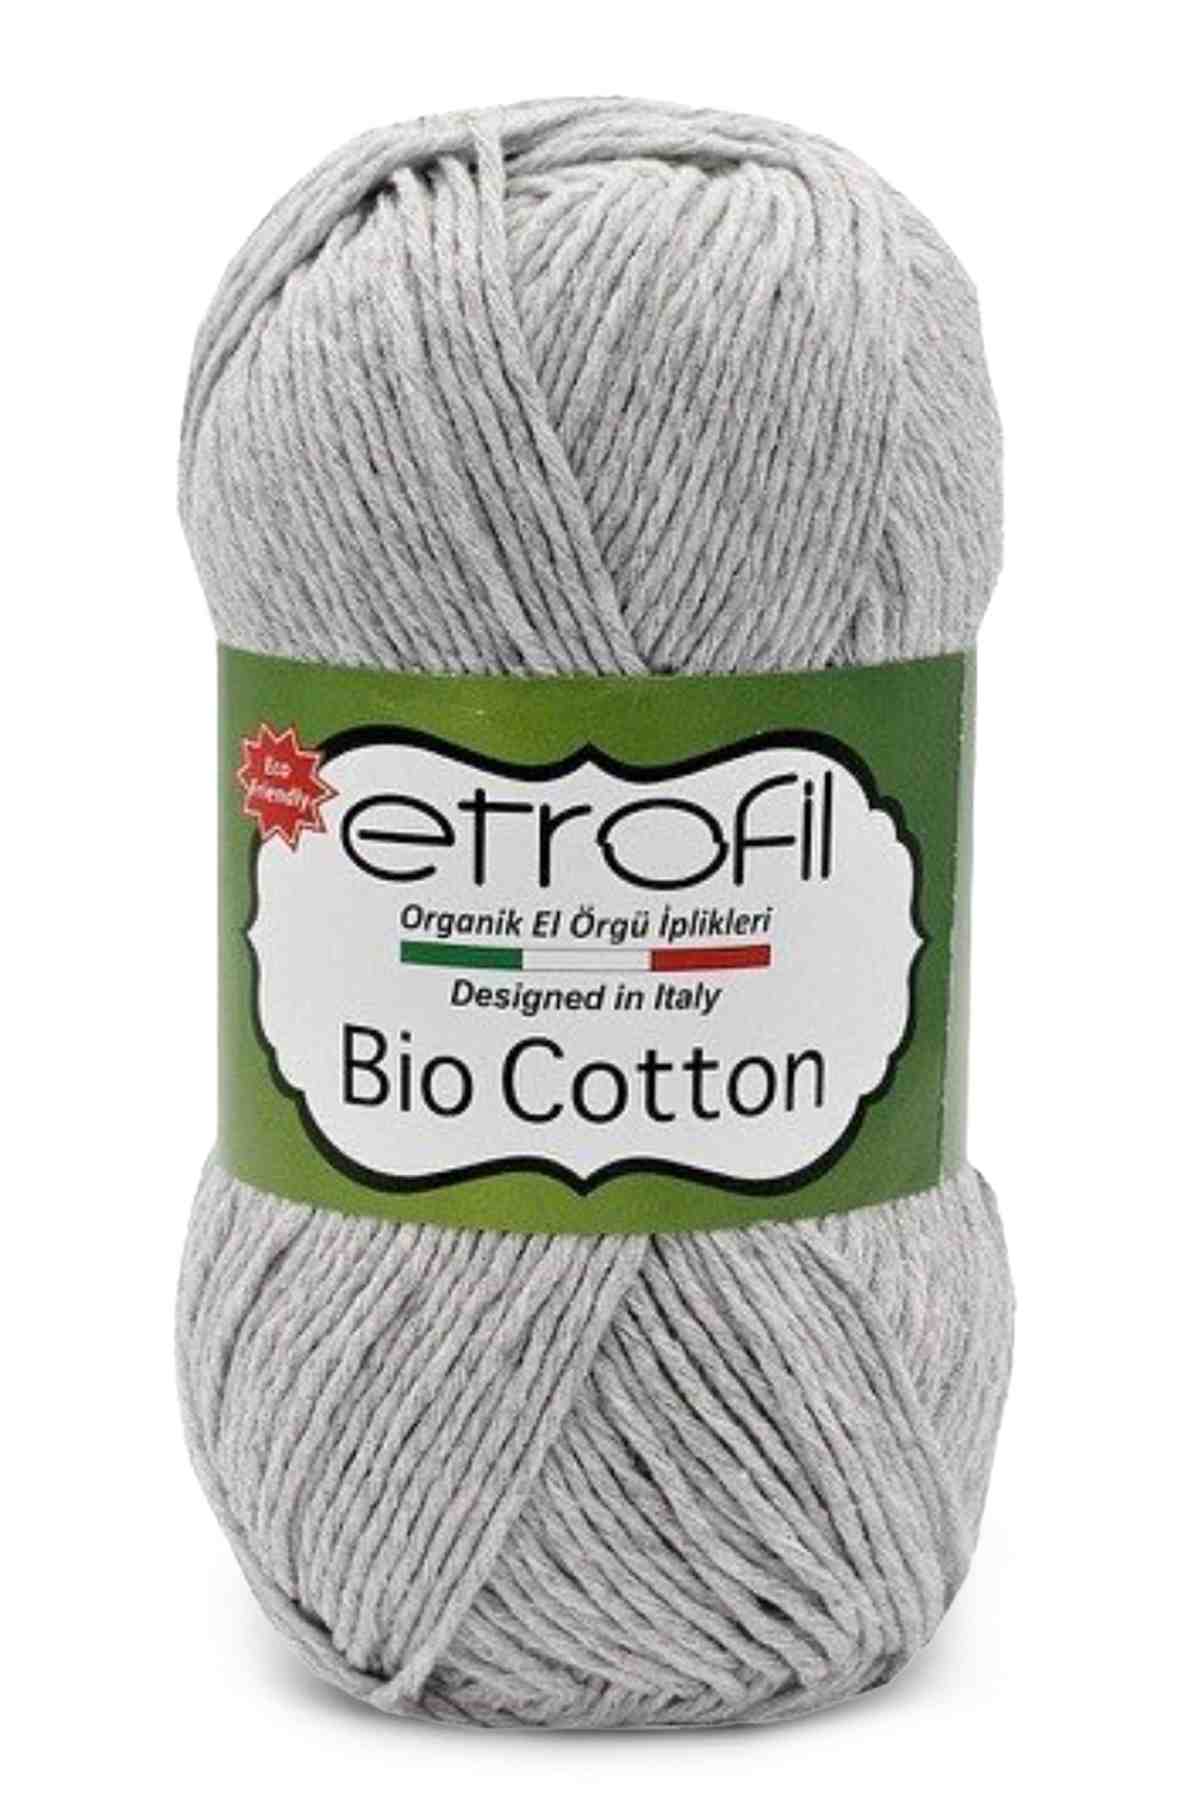 Etrofil Bio Cotton Cotton Yarn